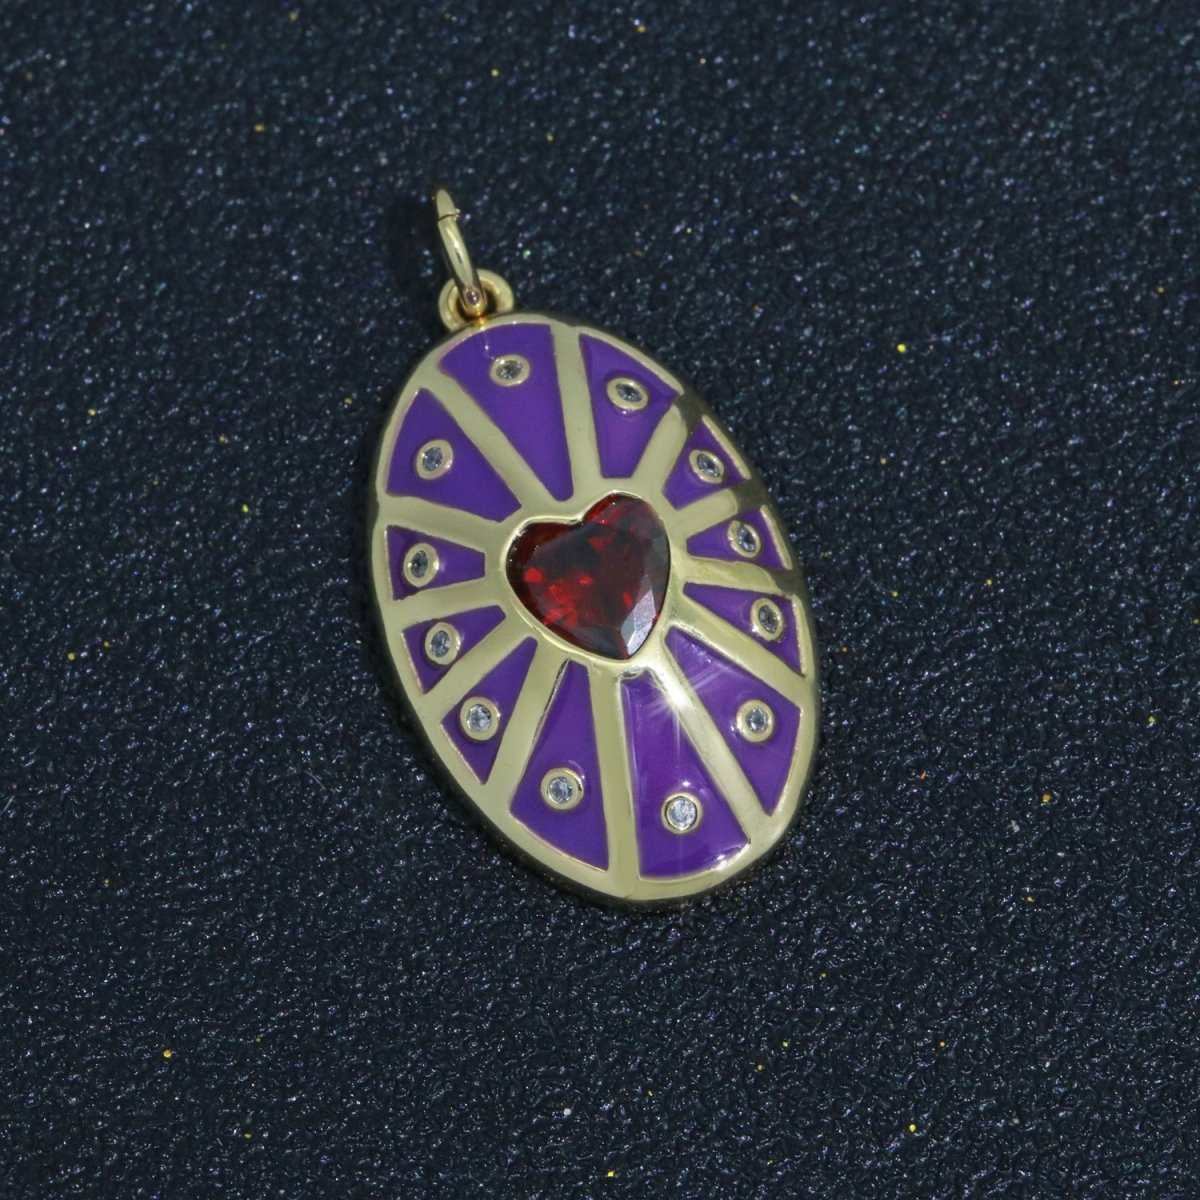 Vintage Shield Pendant 14k Gold Filled Heart Cz Stone Enamel Medallion Charm for Jewelry Making Supply M-701 - M-710 - DLUXCA